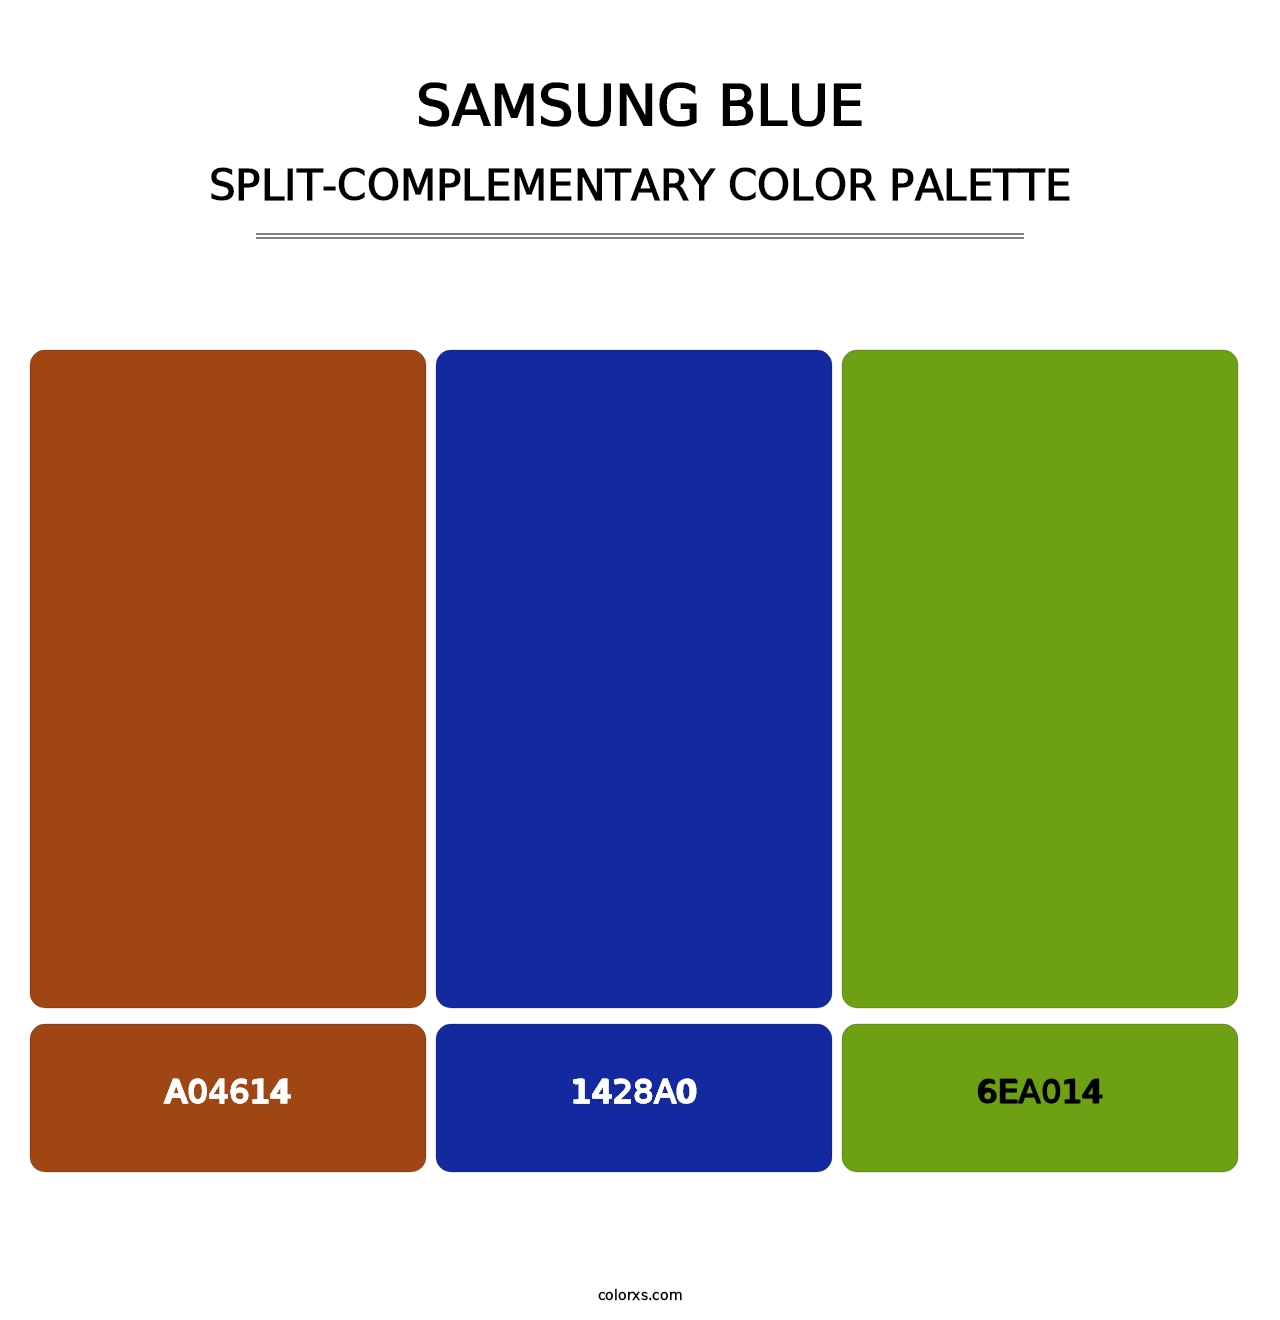 Samsung Blue - Split-Complementary Color Palette